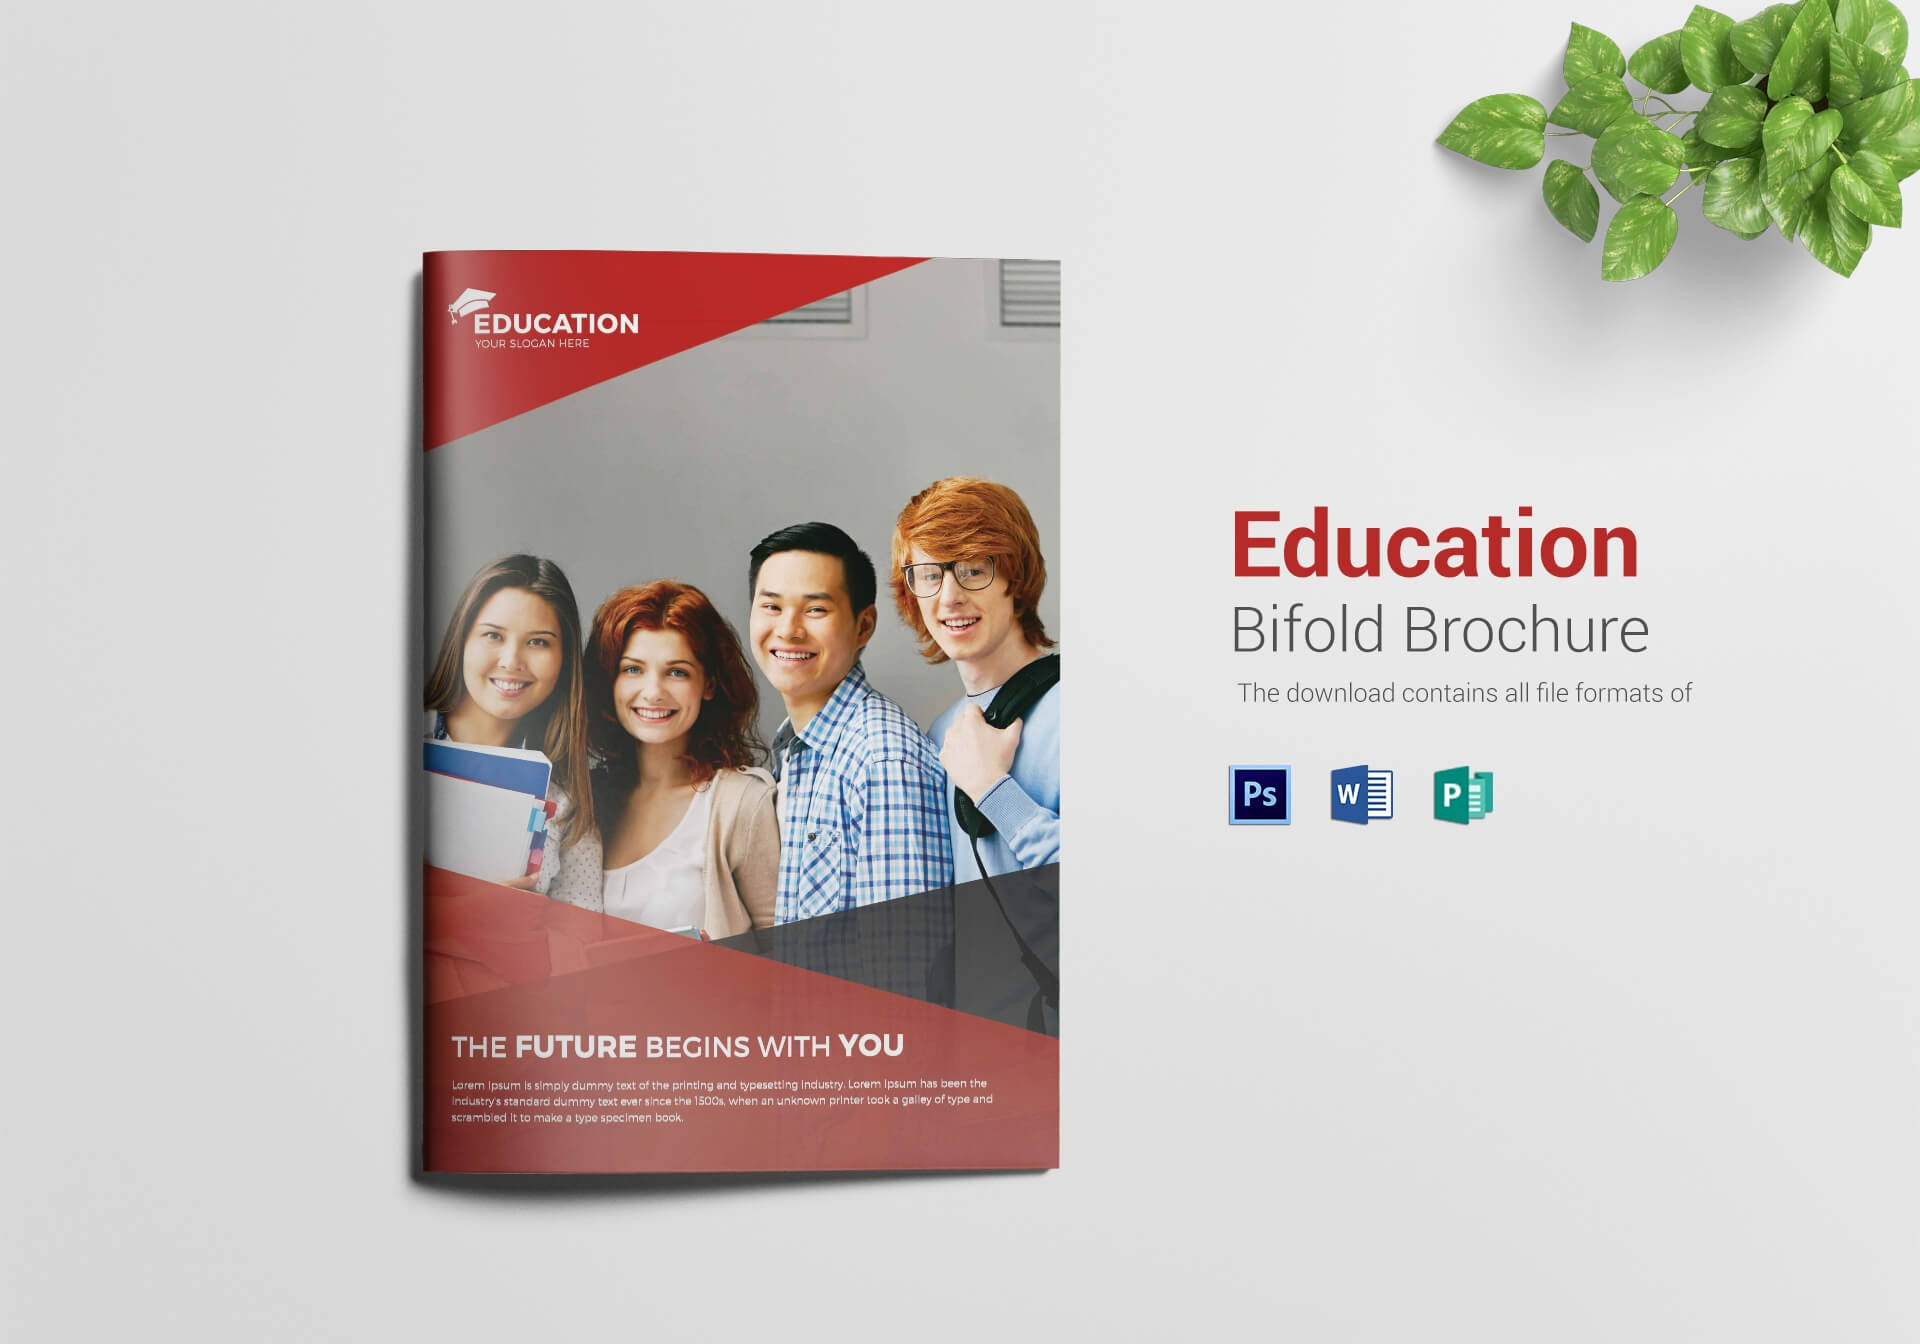 10+ Educational Brochure Design Templates, Examples With Regard To Brochure Design Templates For Education